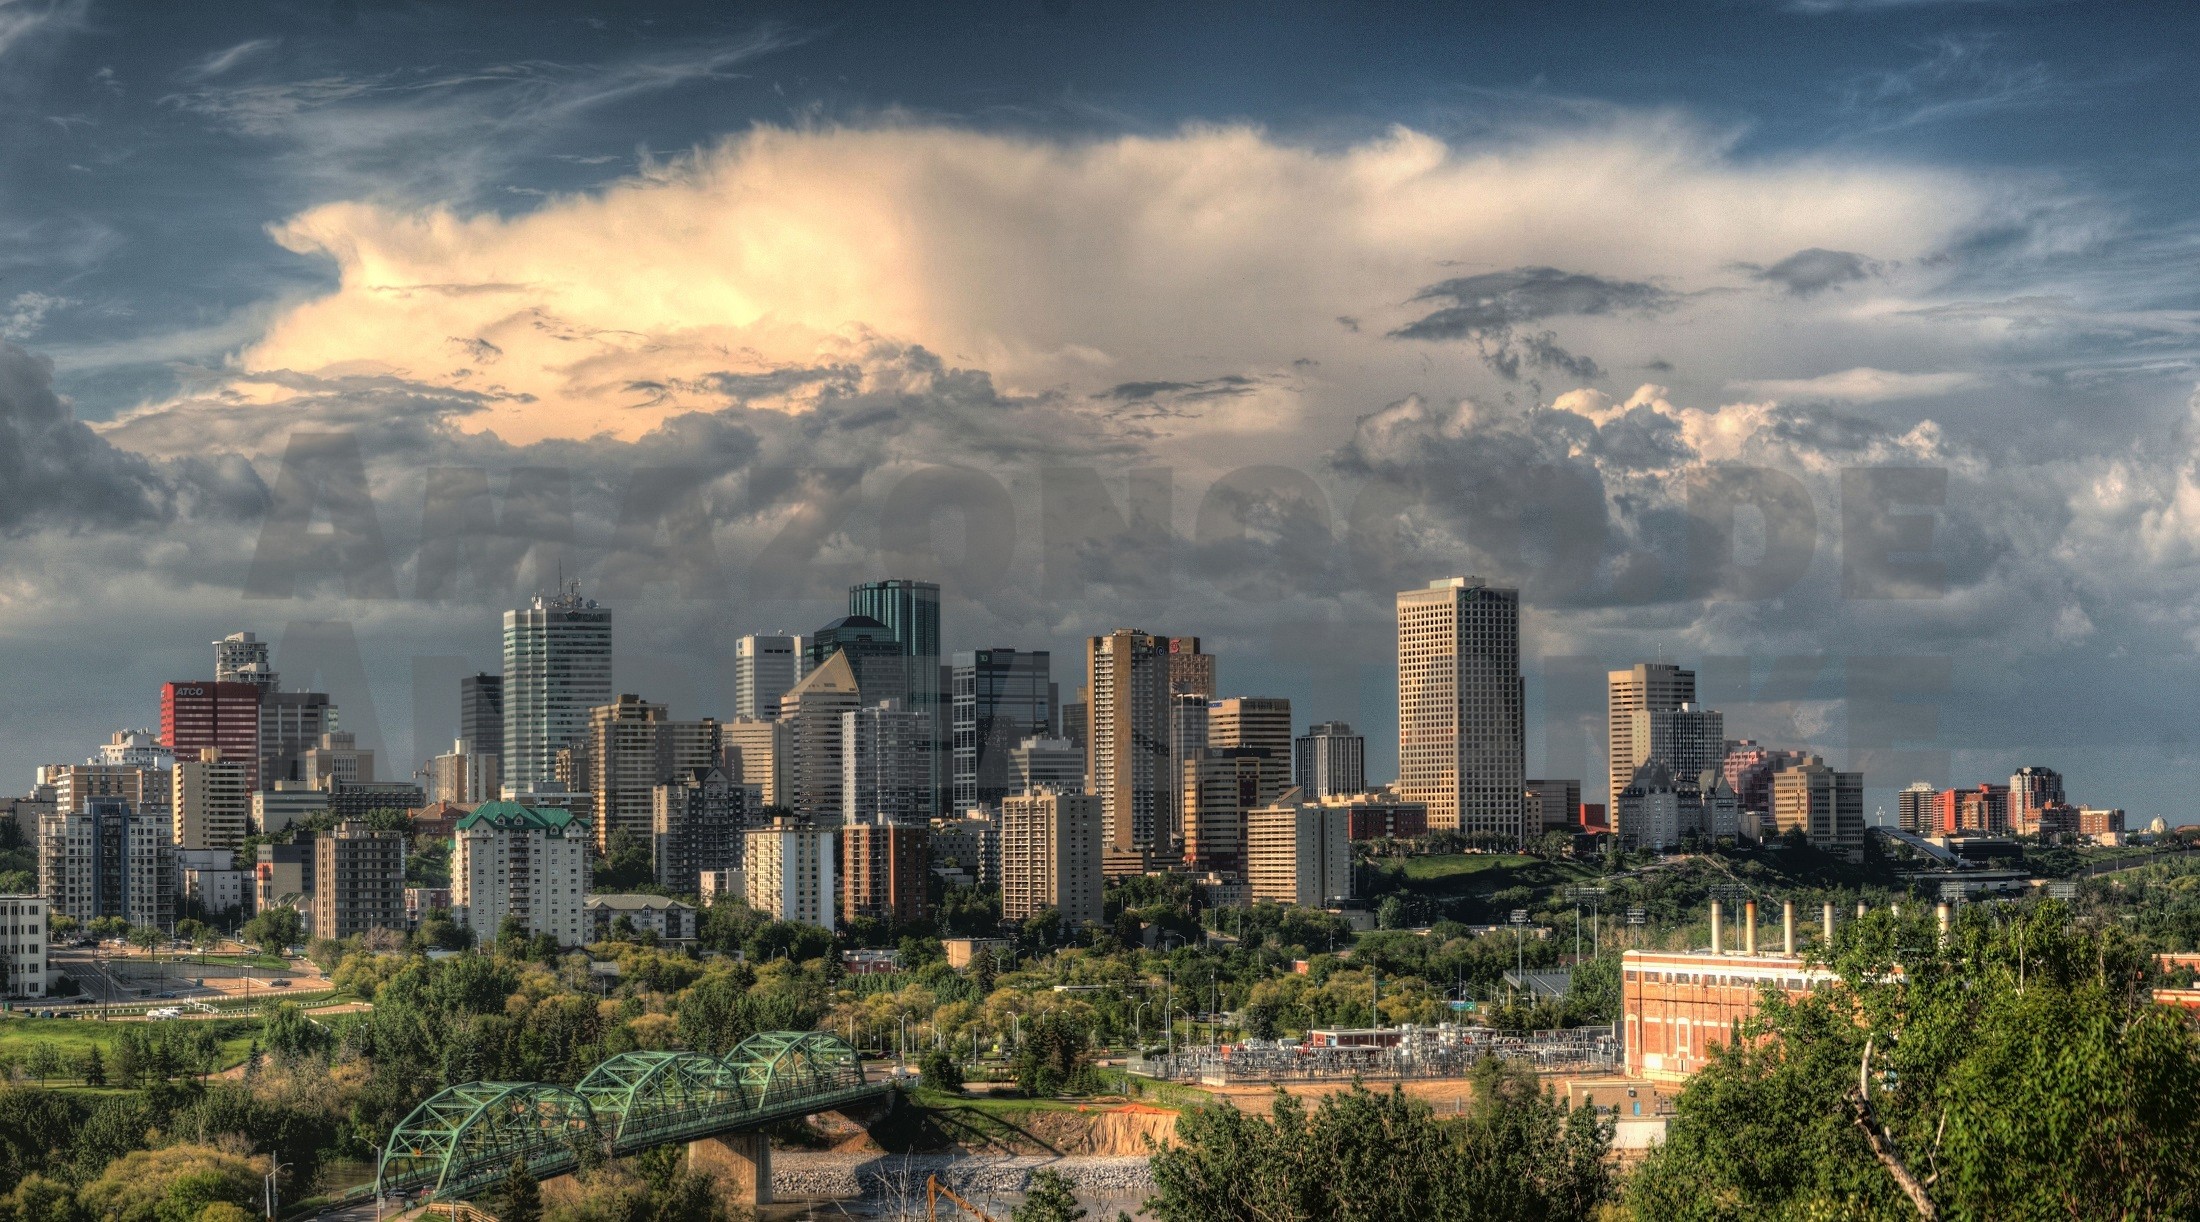 Skyline of Edmonton by Image by skeeze on Pixabay